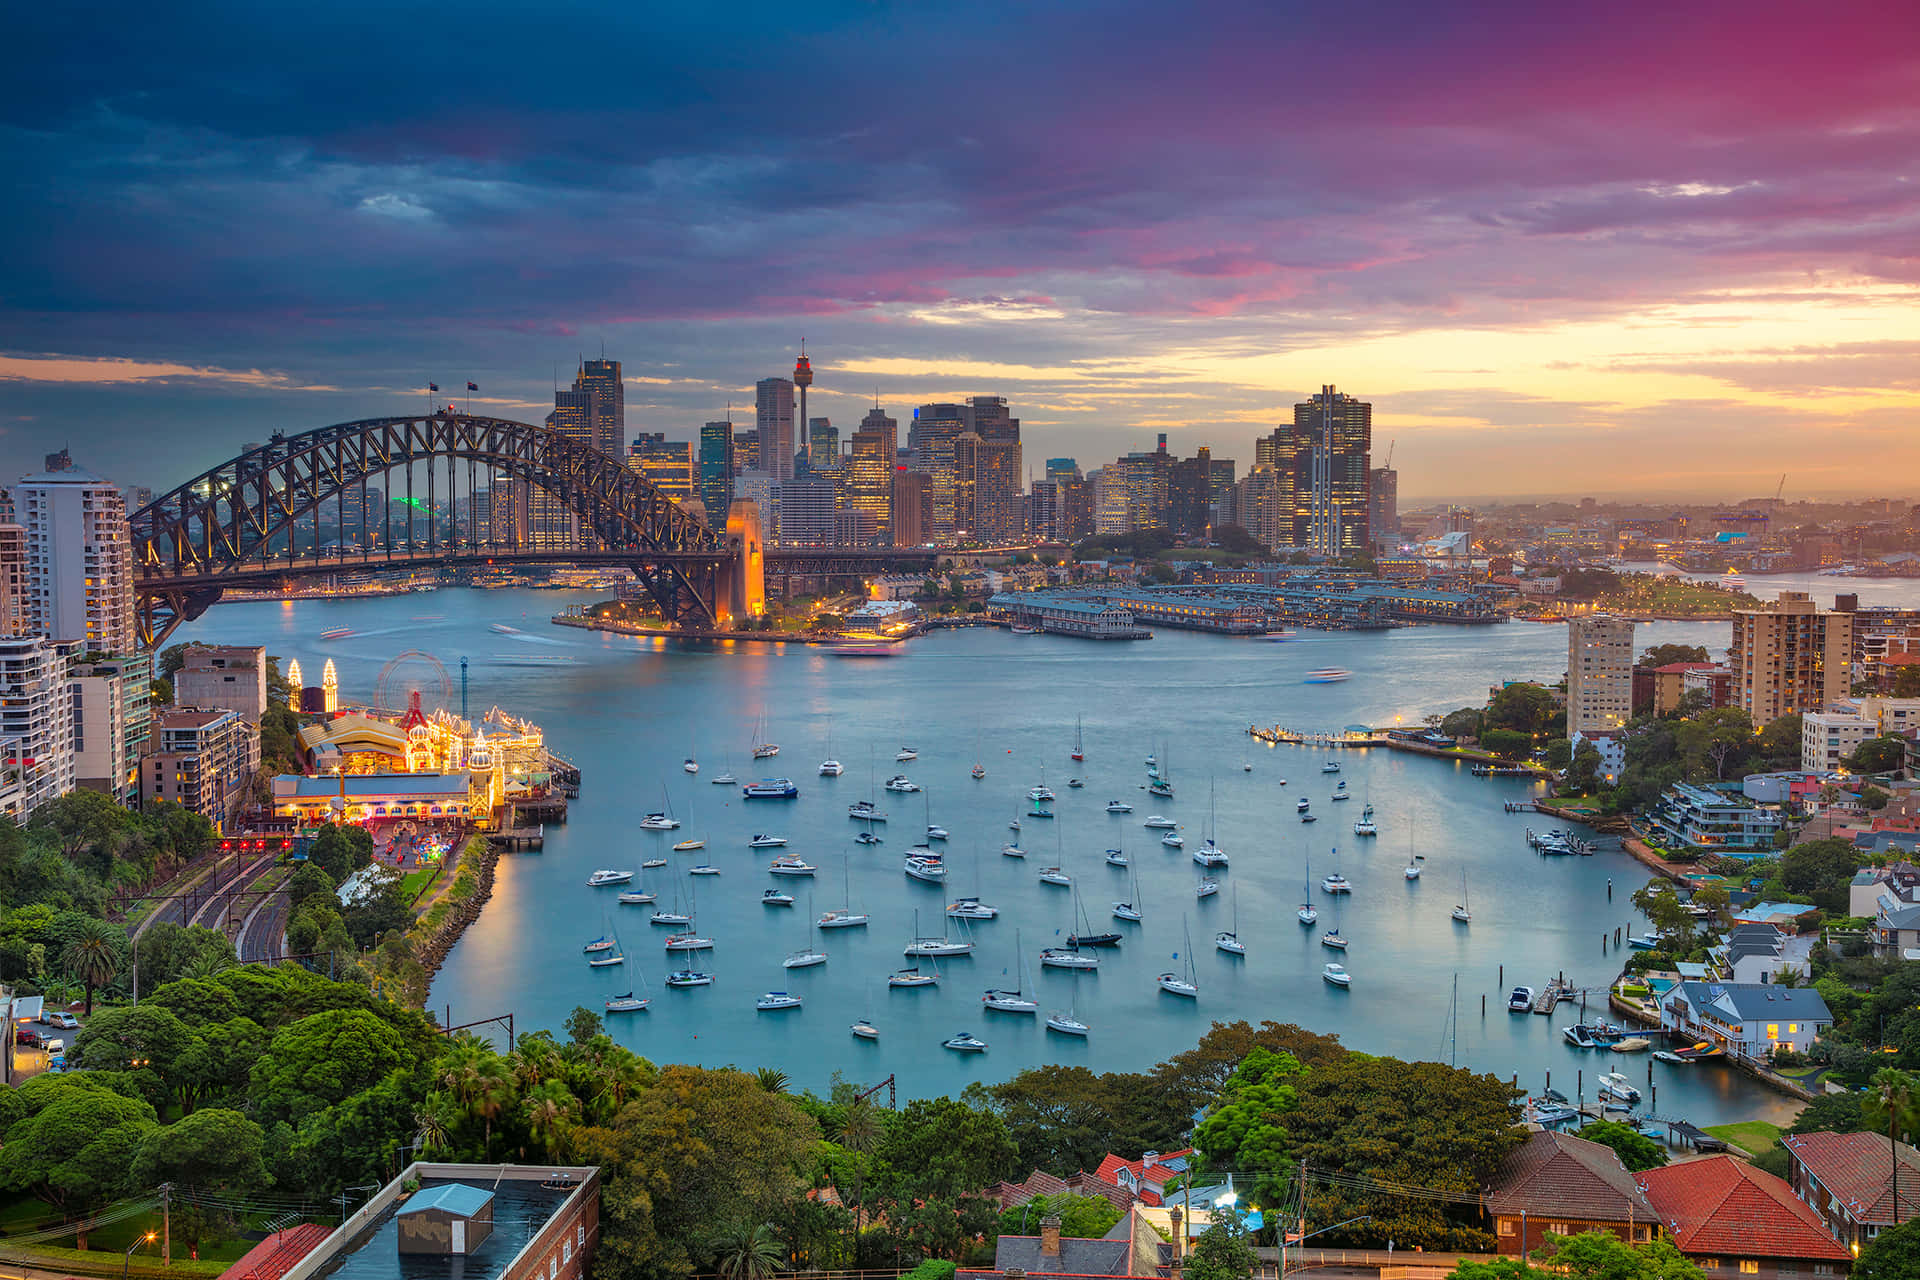 Sydney Harbour Sunset Cruise View.jpg Wallpaper